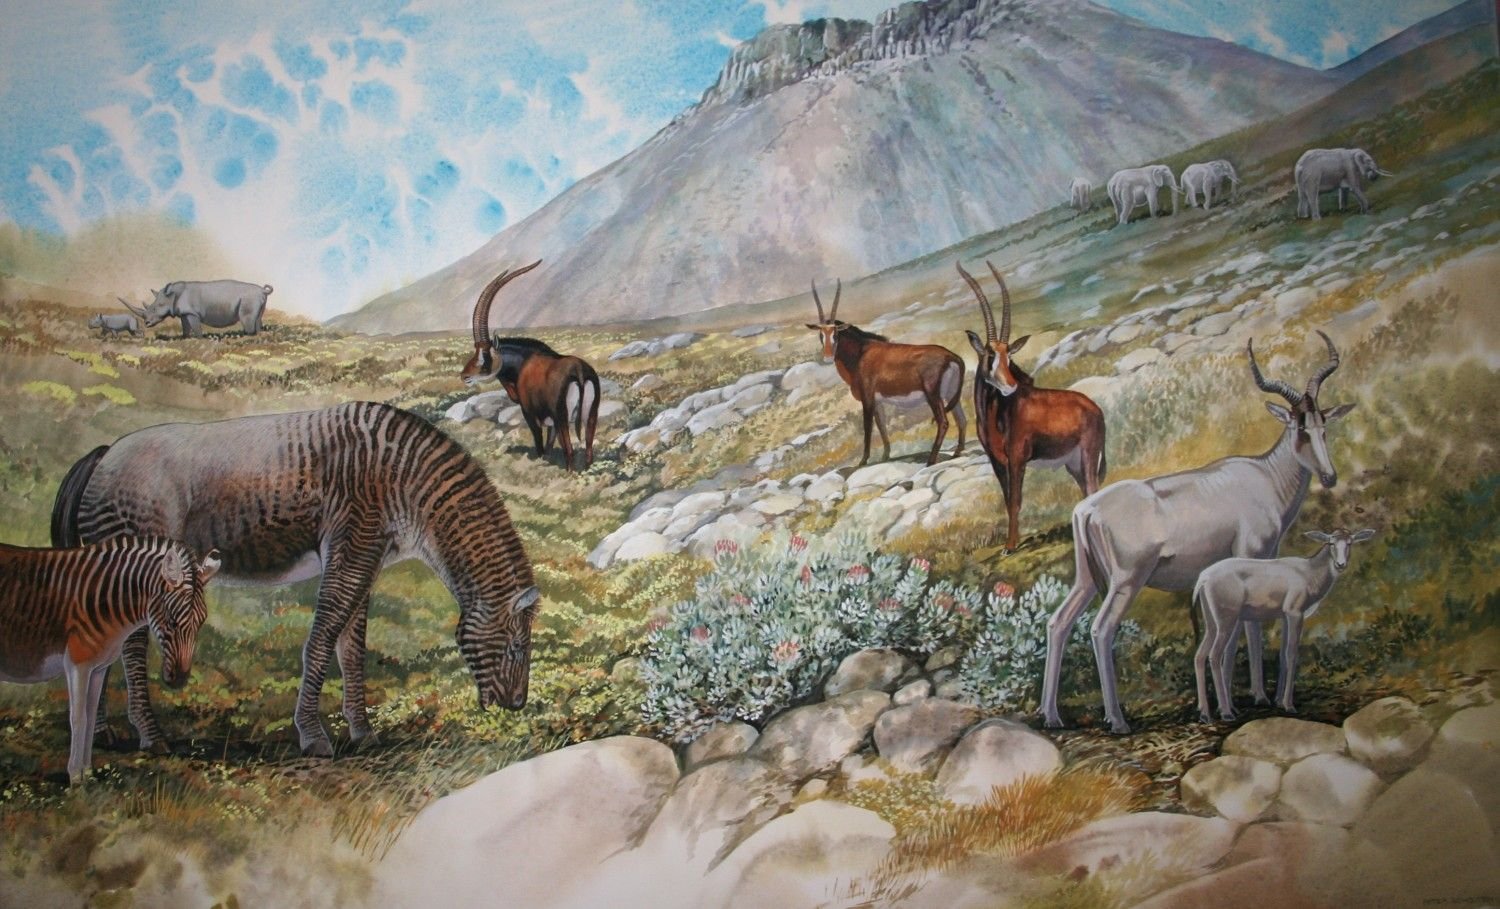 Кайнозойская эра животный мир. Кайнозойская мегафауна. Фауна плейстоцена Америки. Фауна плейстоцена Северной Америки. Плейстоцен Кайнозой.